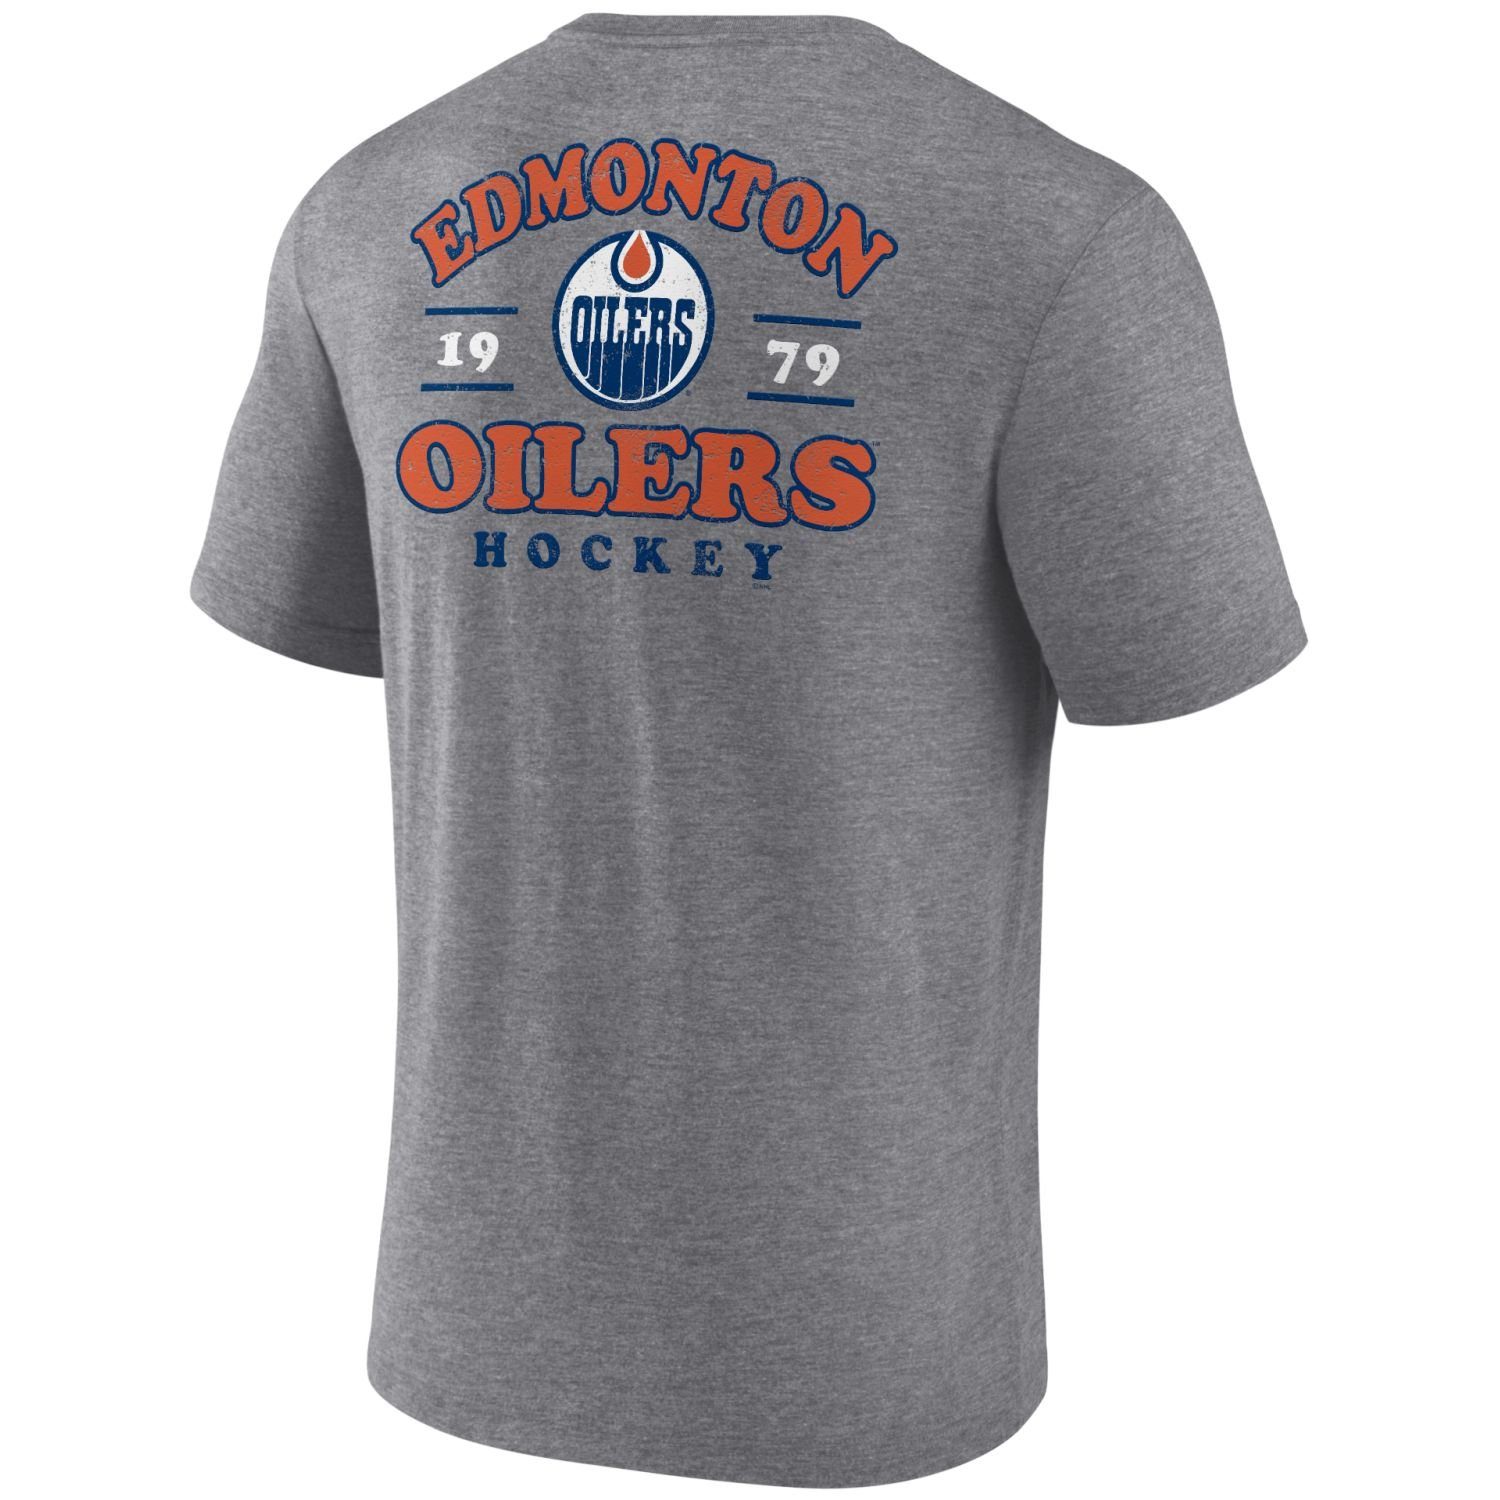 Fanatics Print-Shirt Edmonton Oilers Backprint heather TriBlend grey